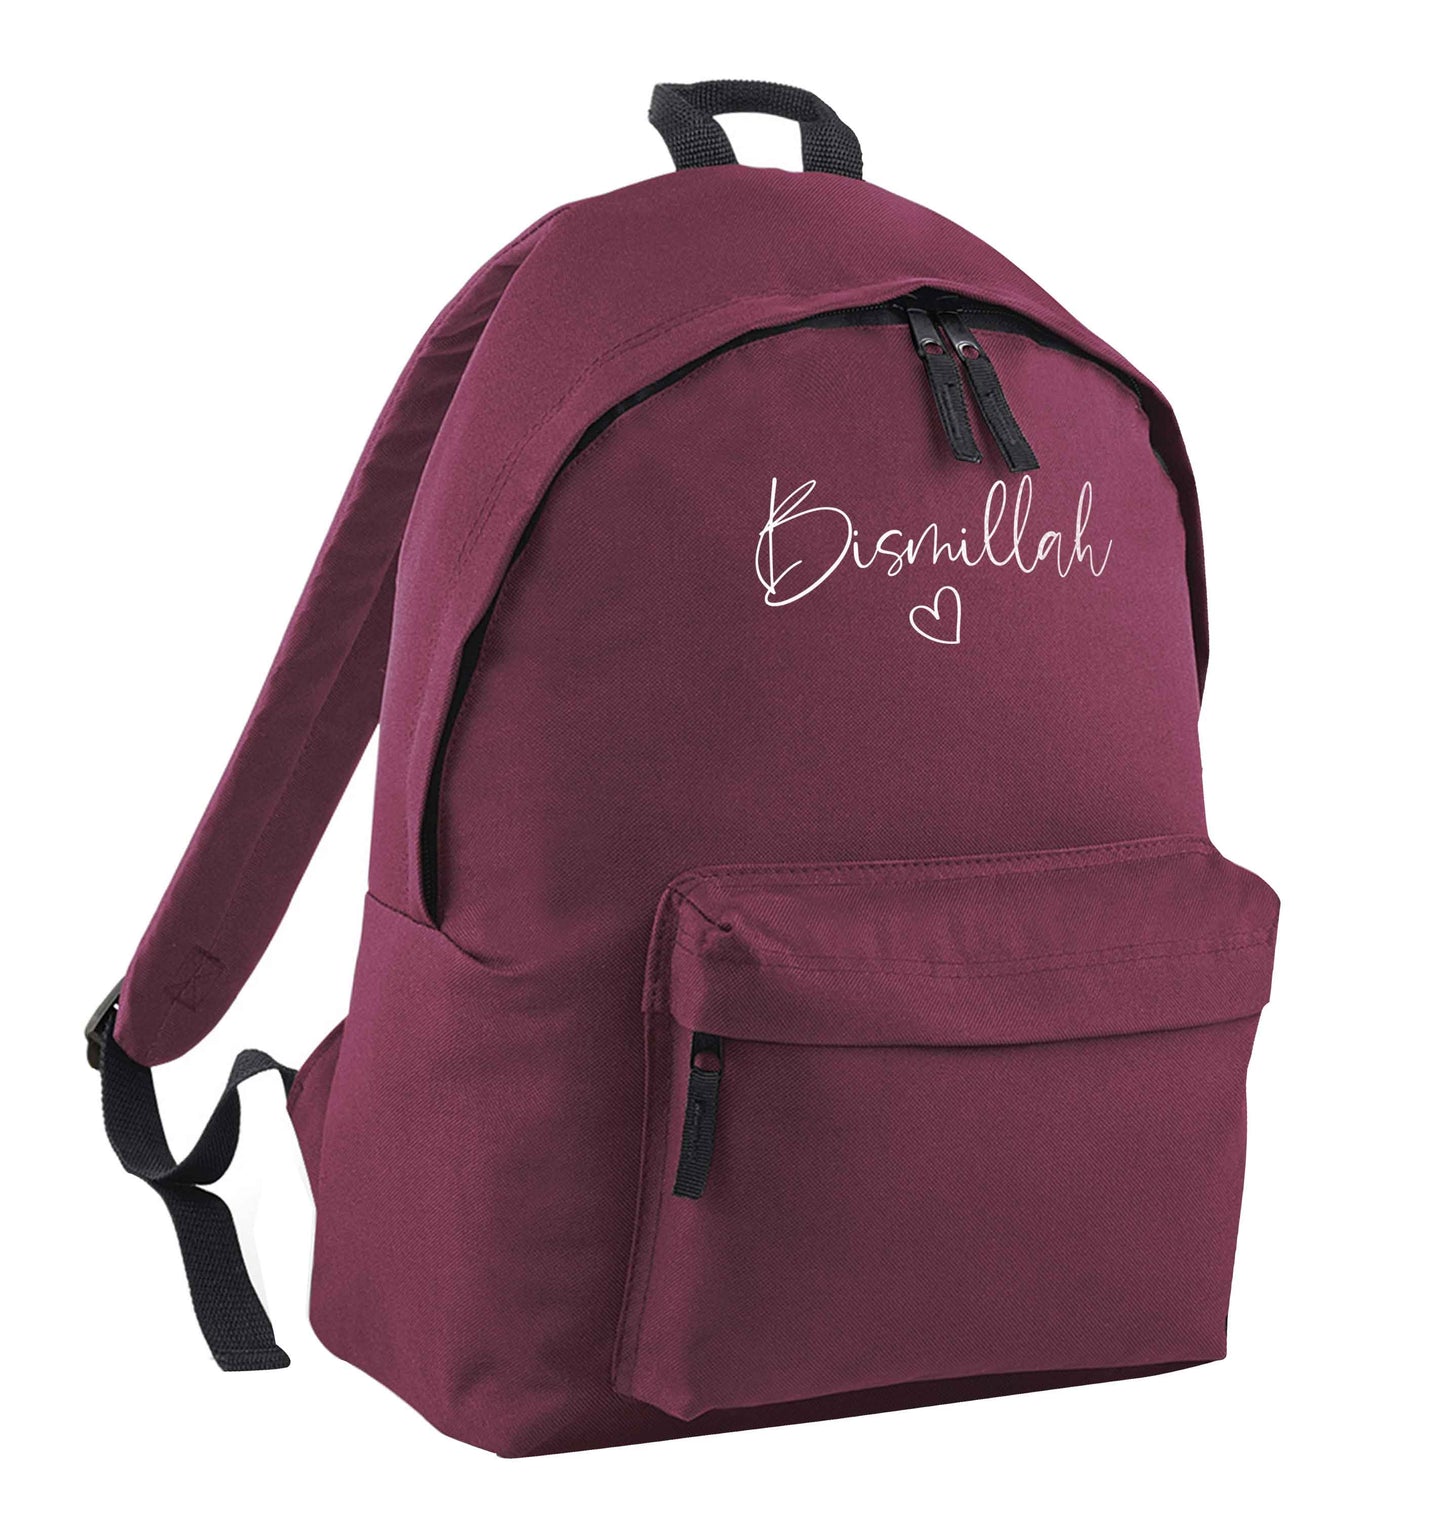 Bismillah maroon adults backpack